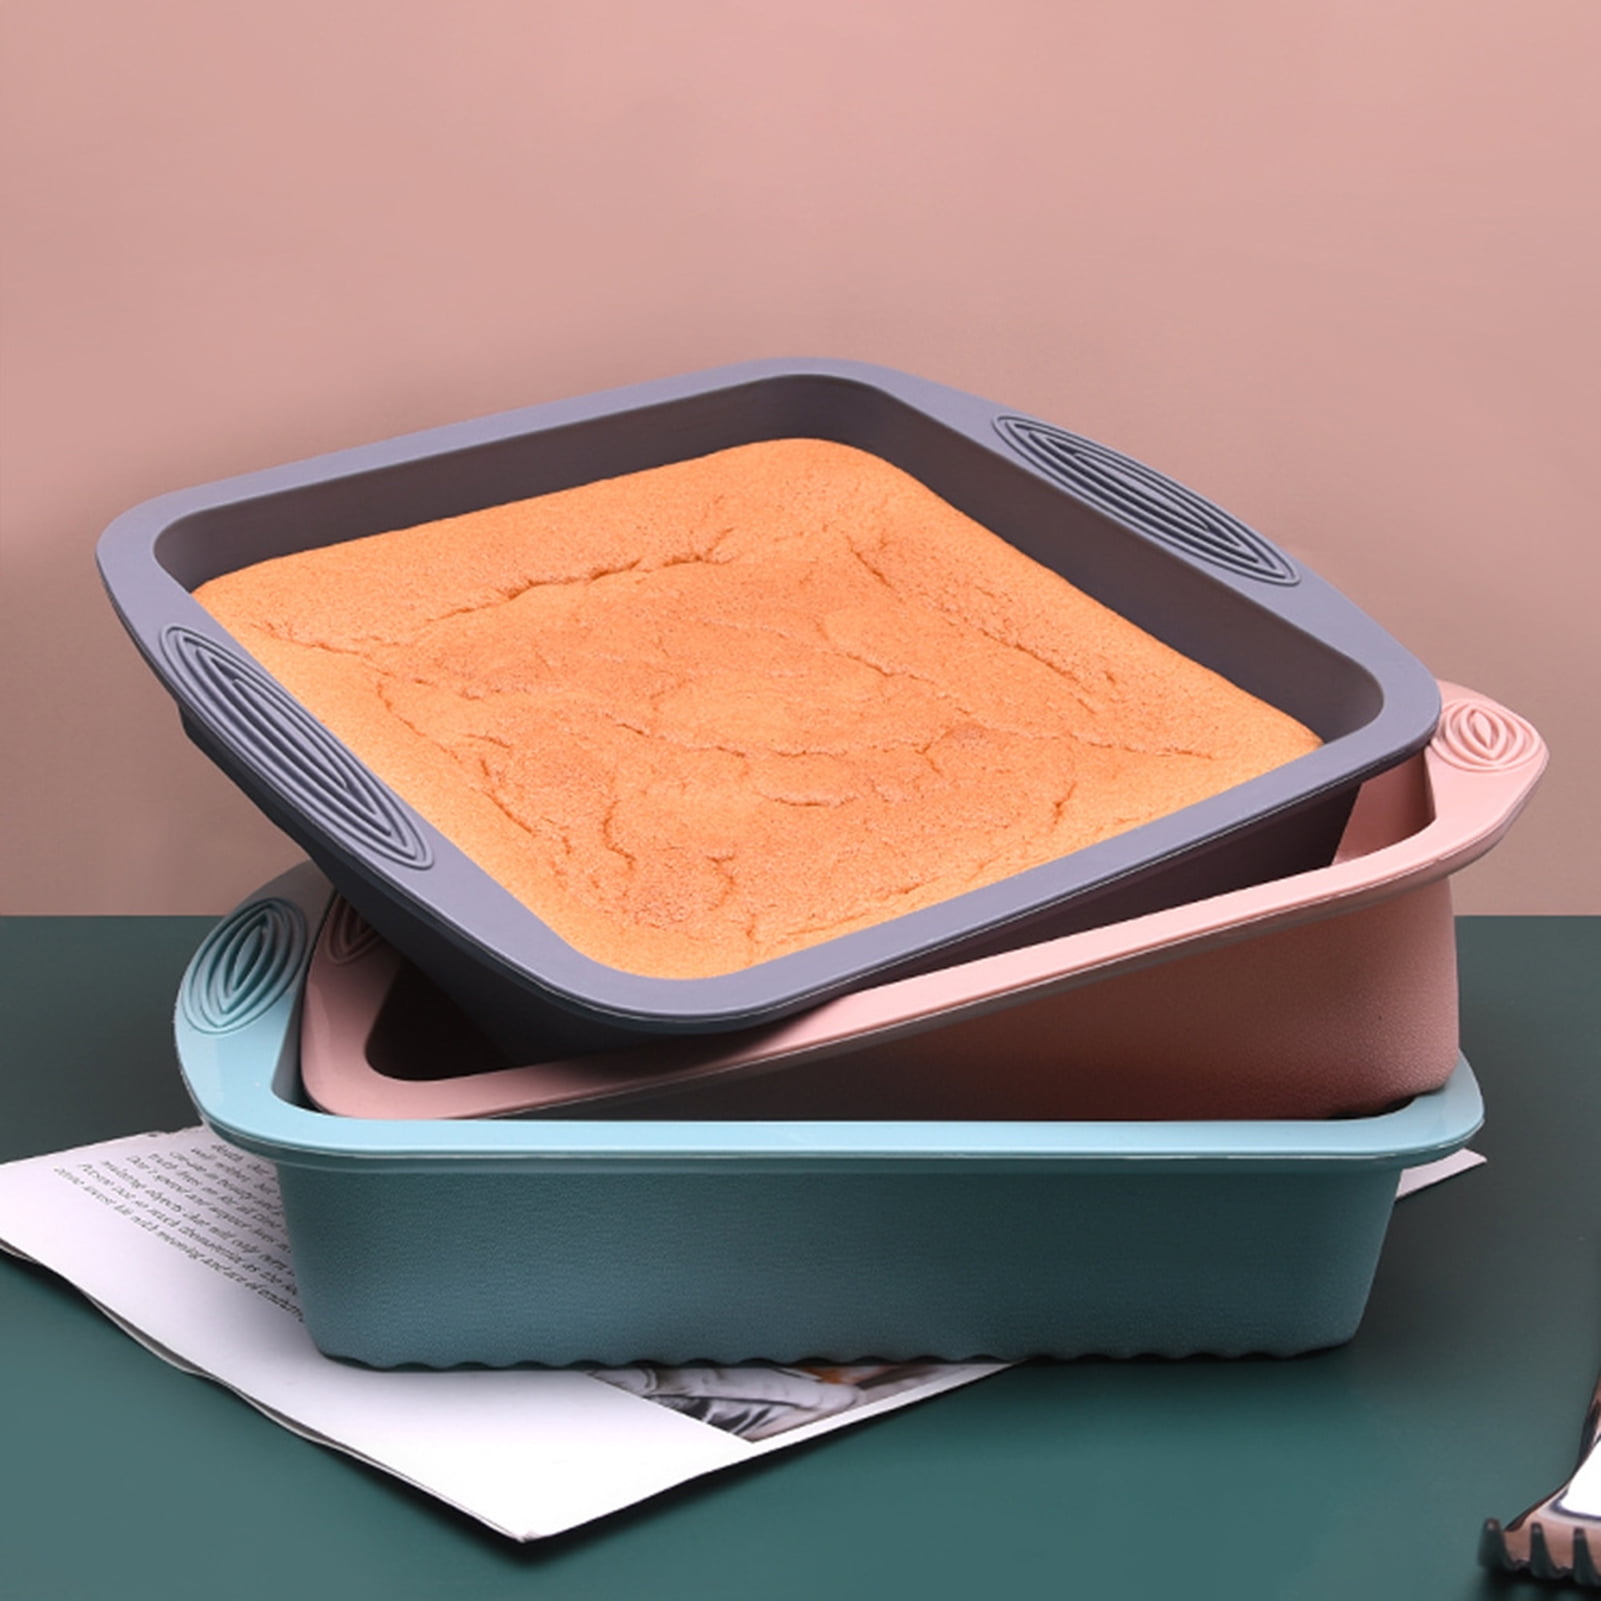 Herogo 8”x 8” Square Cake Pan, Stainless Steel Square Baking Pan with Lid,  Cakes Brownie Lasagna Pan Set, 2 Pans + 2 Lids, Healthy & Durable